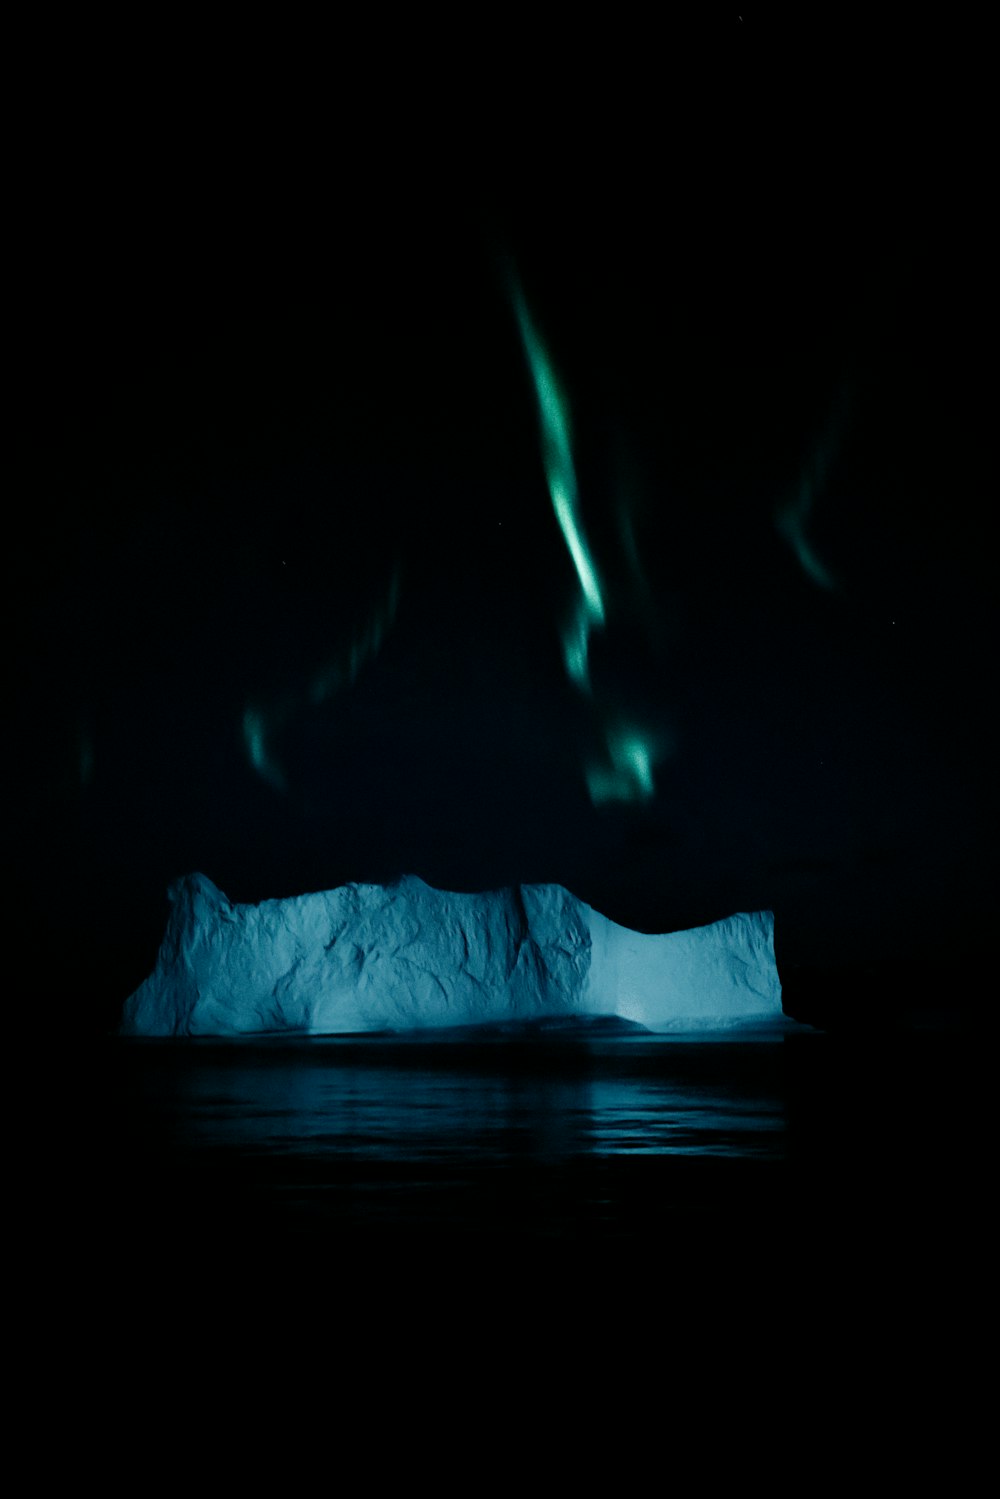 ice berg and aurora borealis